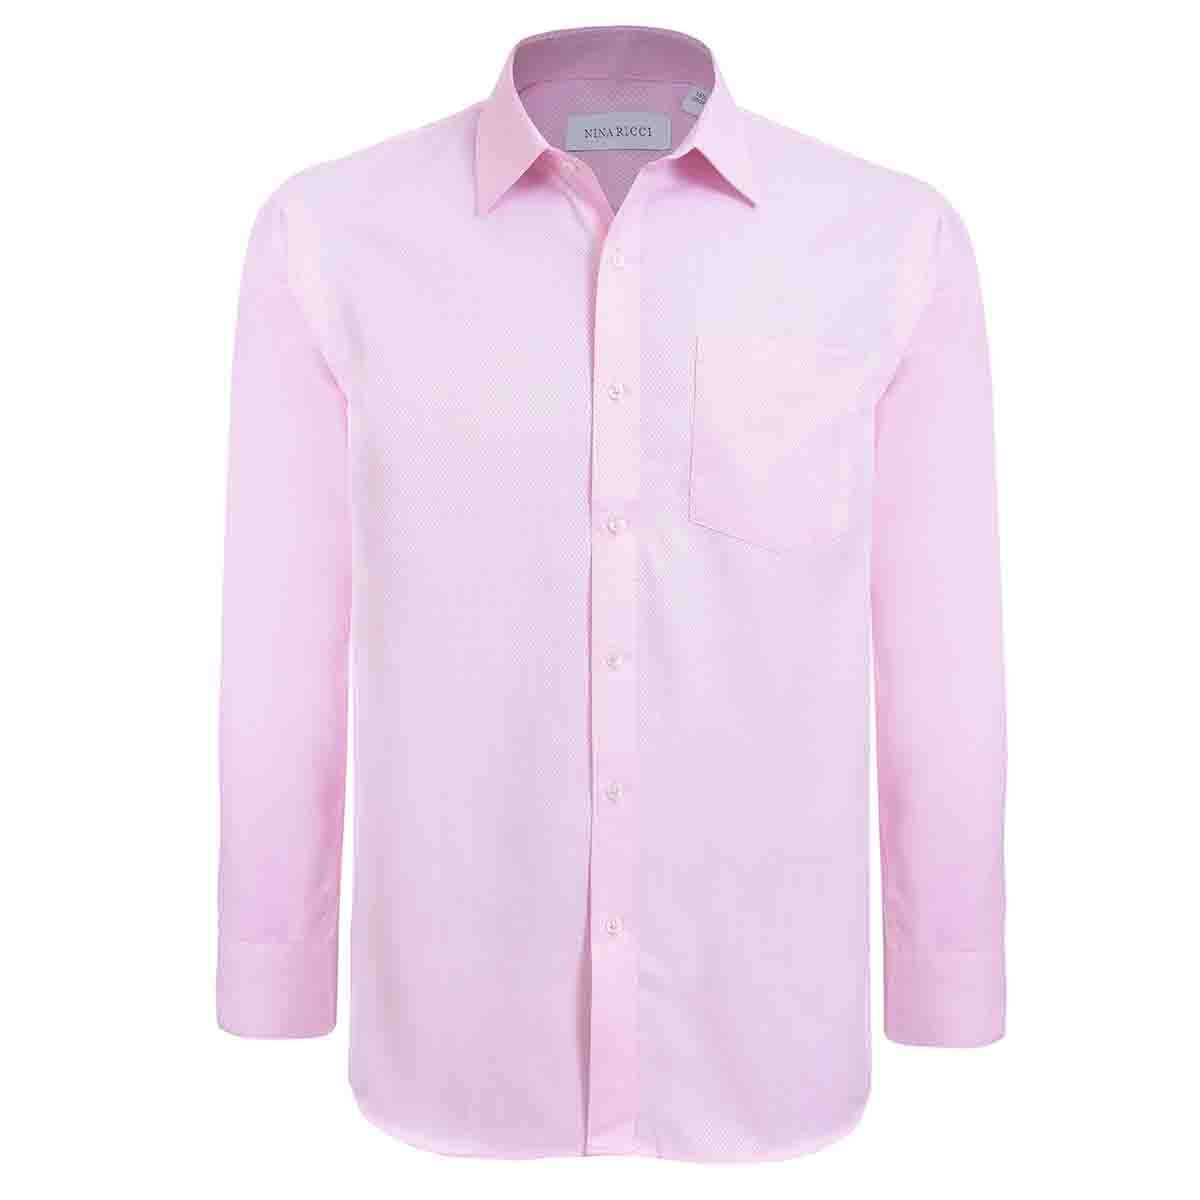 Camisa de Vestir Color Rosa Claro Nina Ricci para Caballero